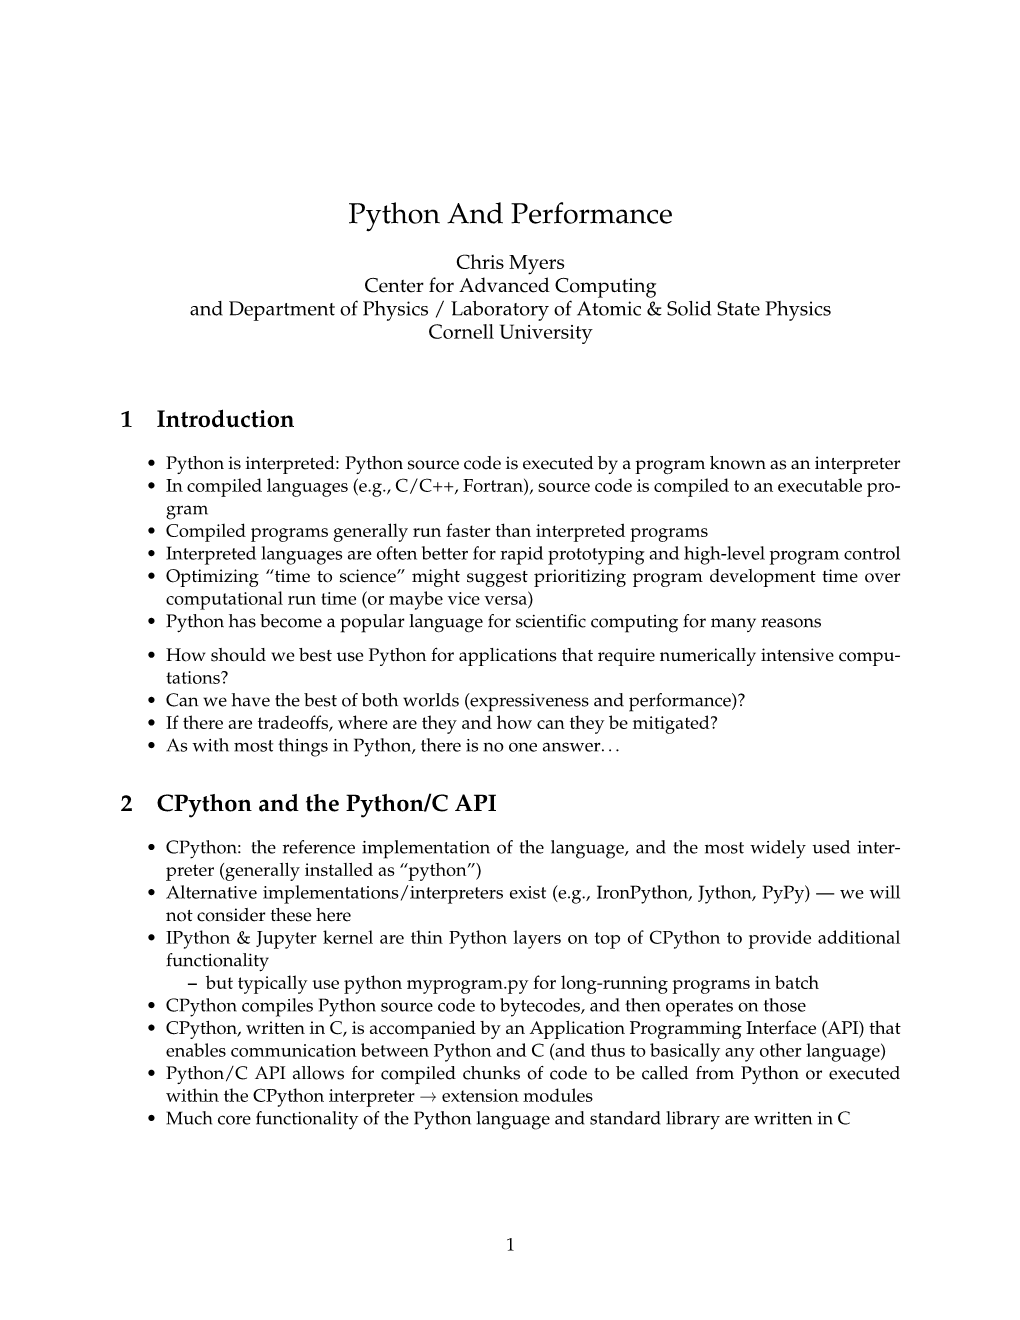 Python and Performance